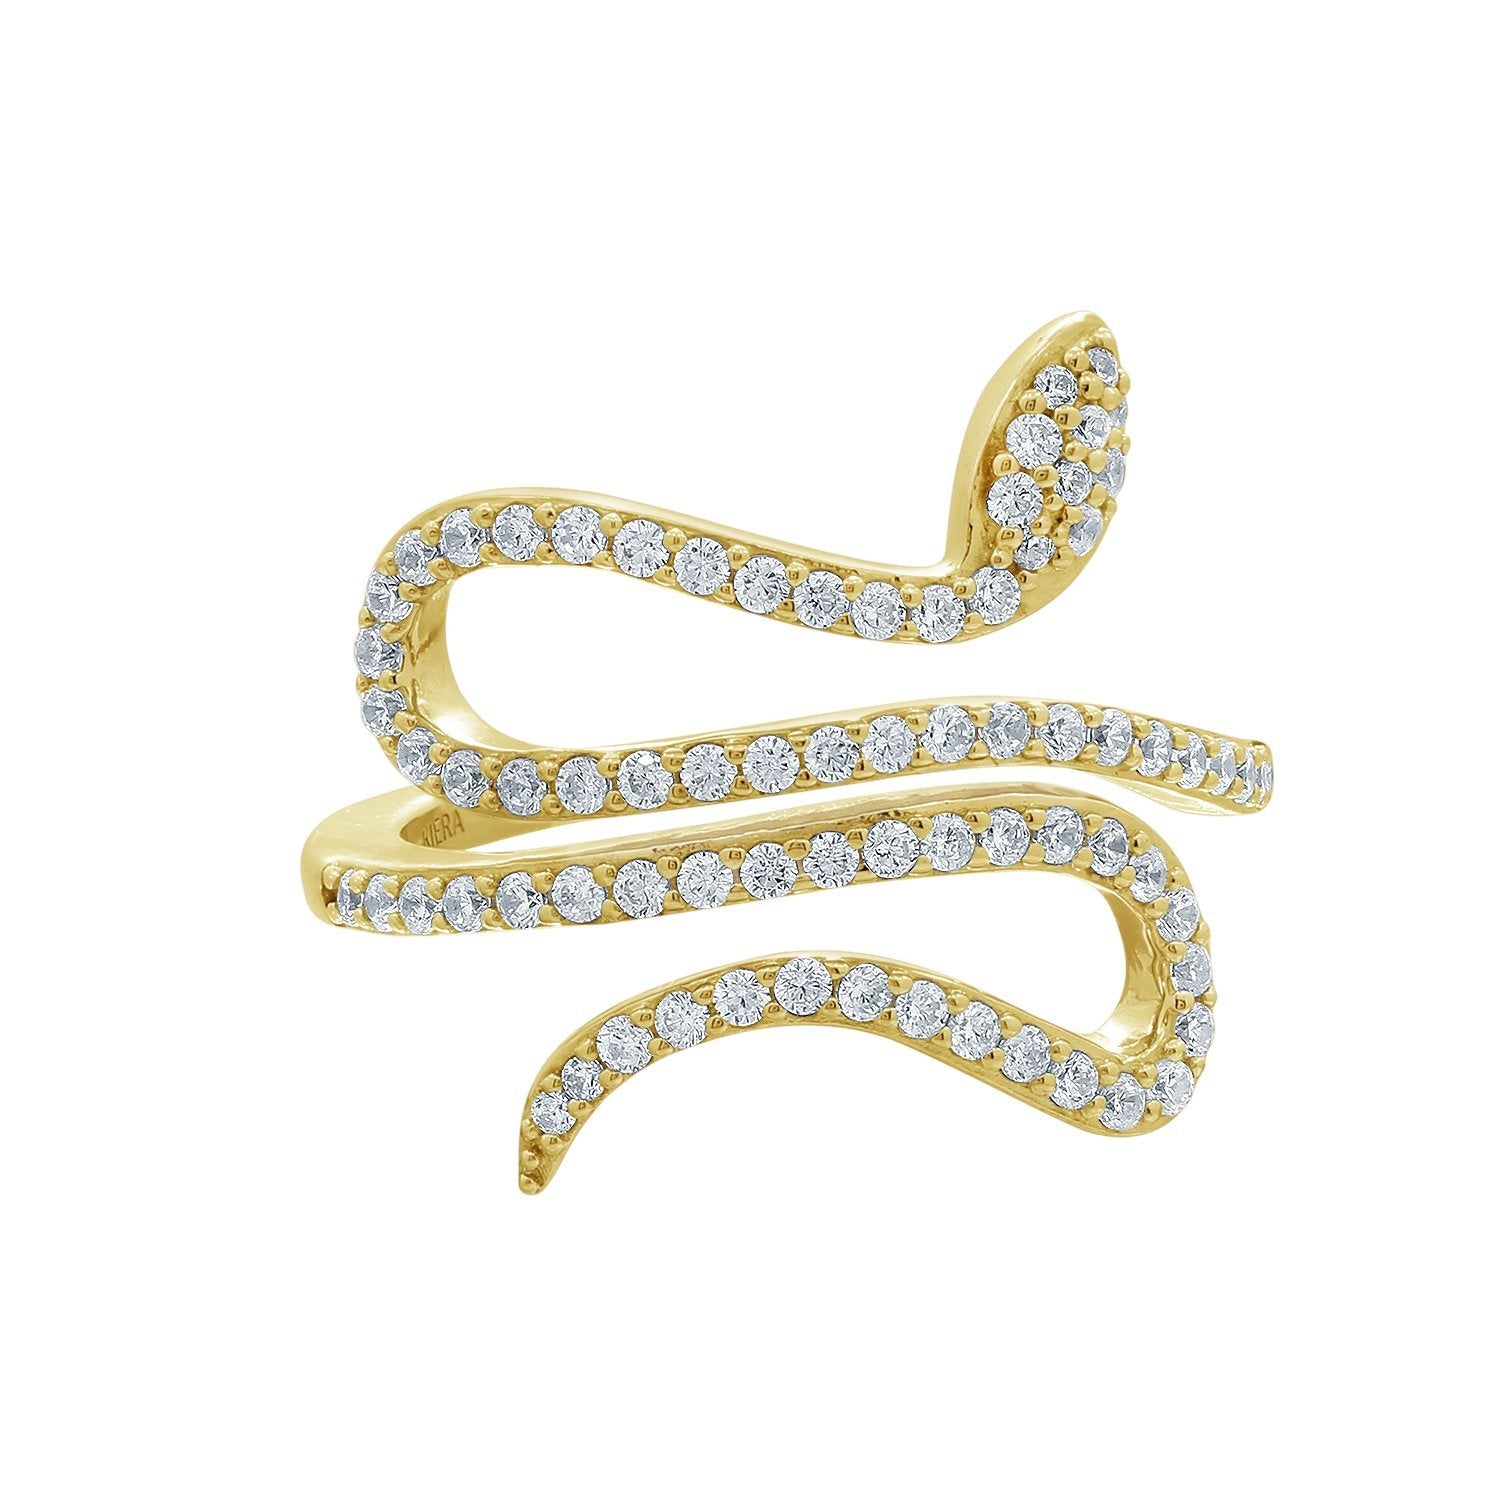 KIERA NEW YORK Sterling Silver 0.6 cttw Cubic Zirconia Bypass Swirl Snake Ring